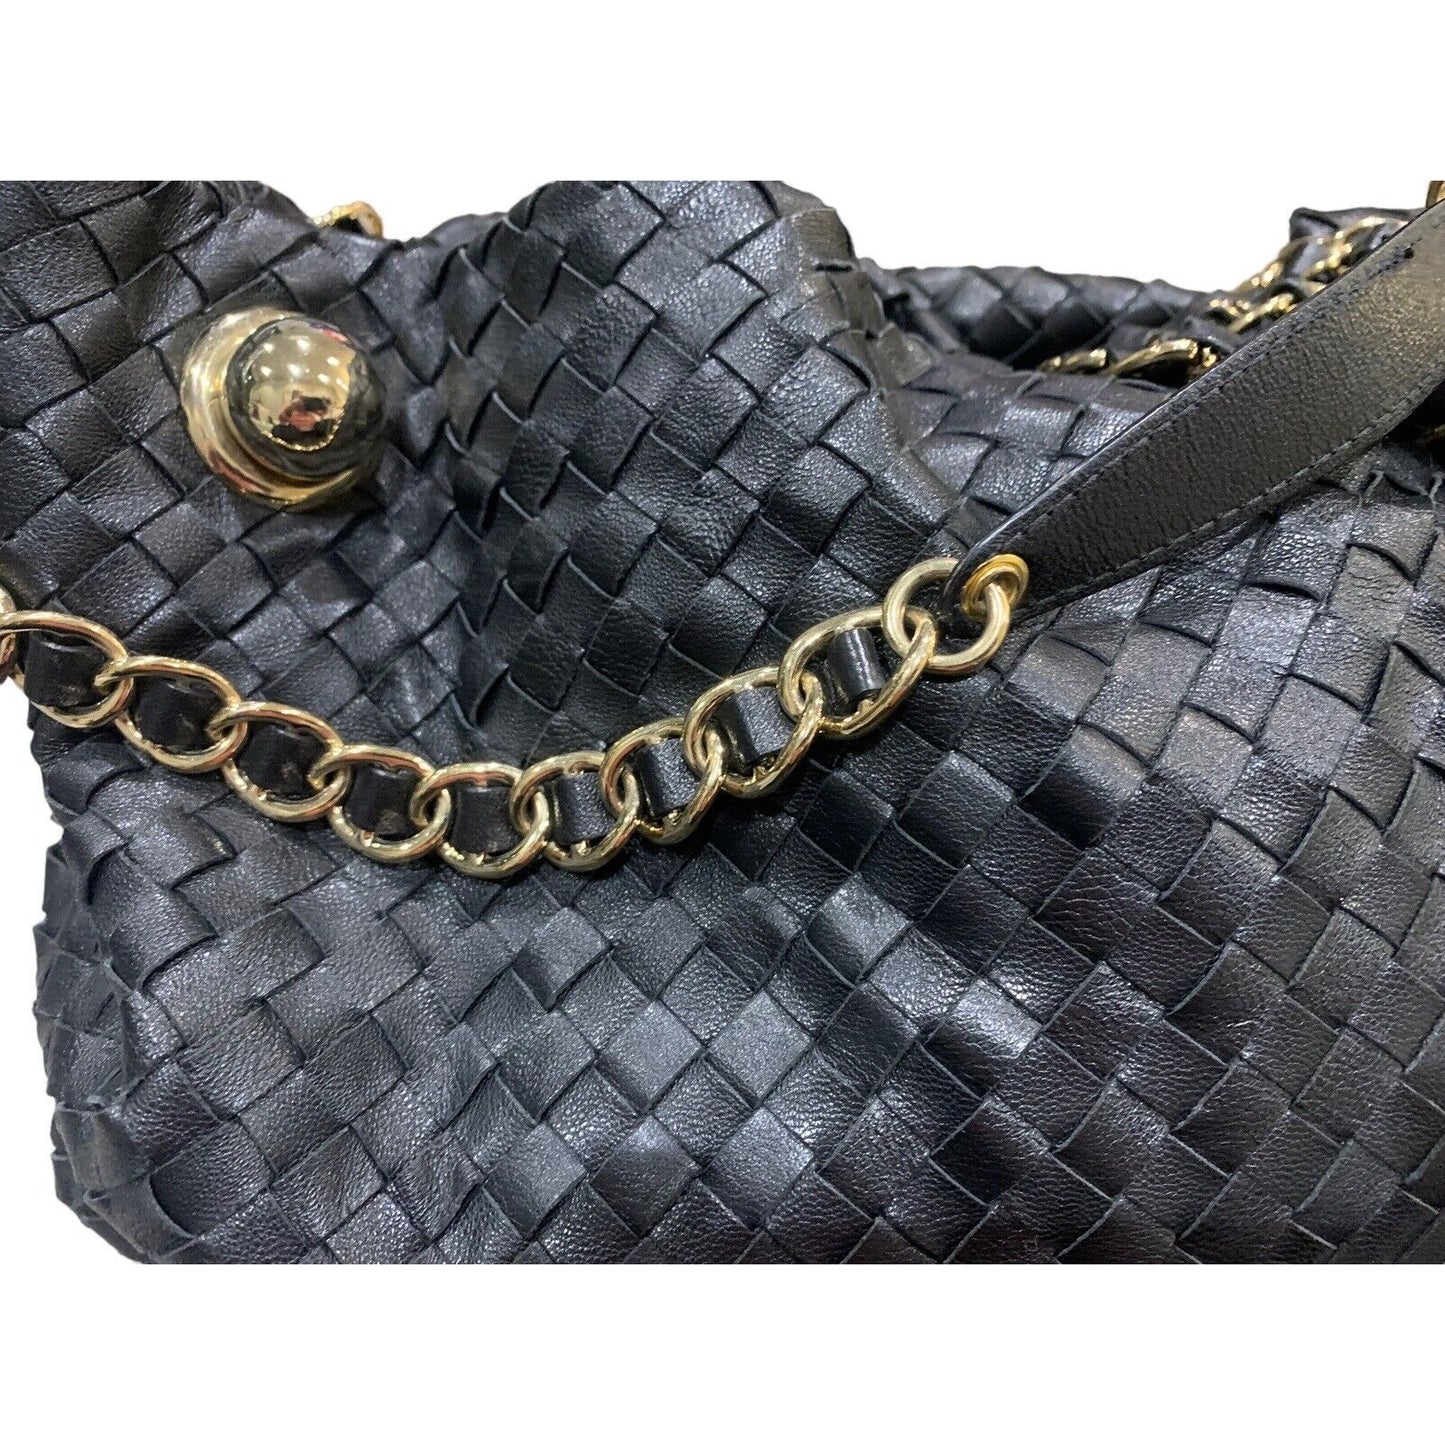 Parris Intrecciato Woven Leather Hobo Sac Handbag